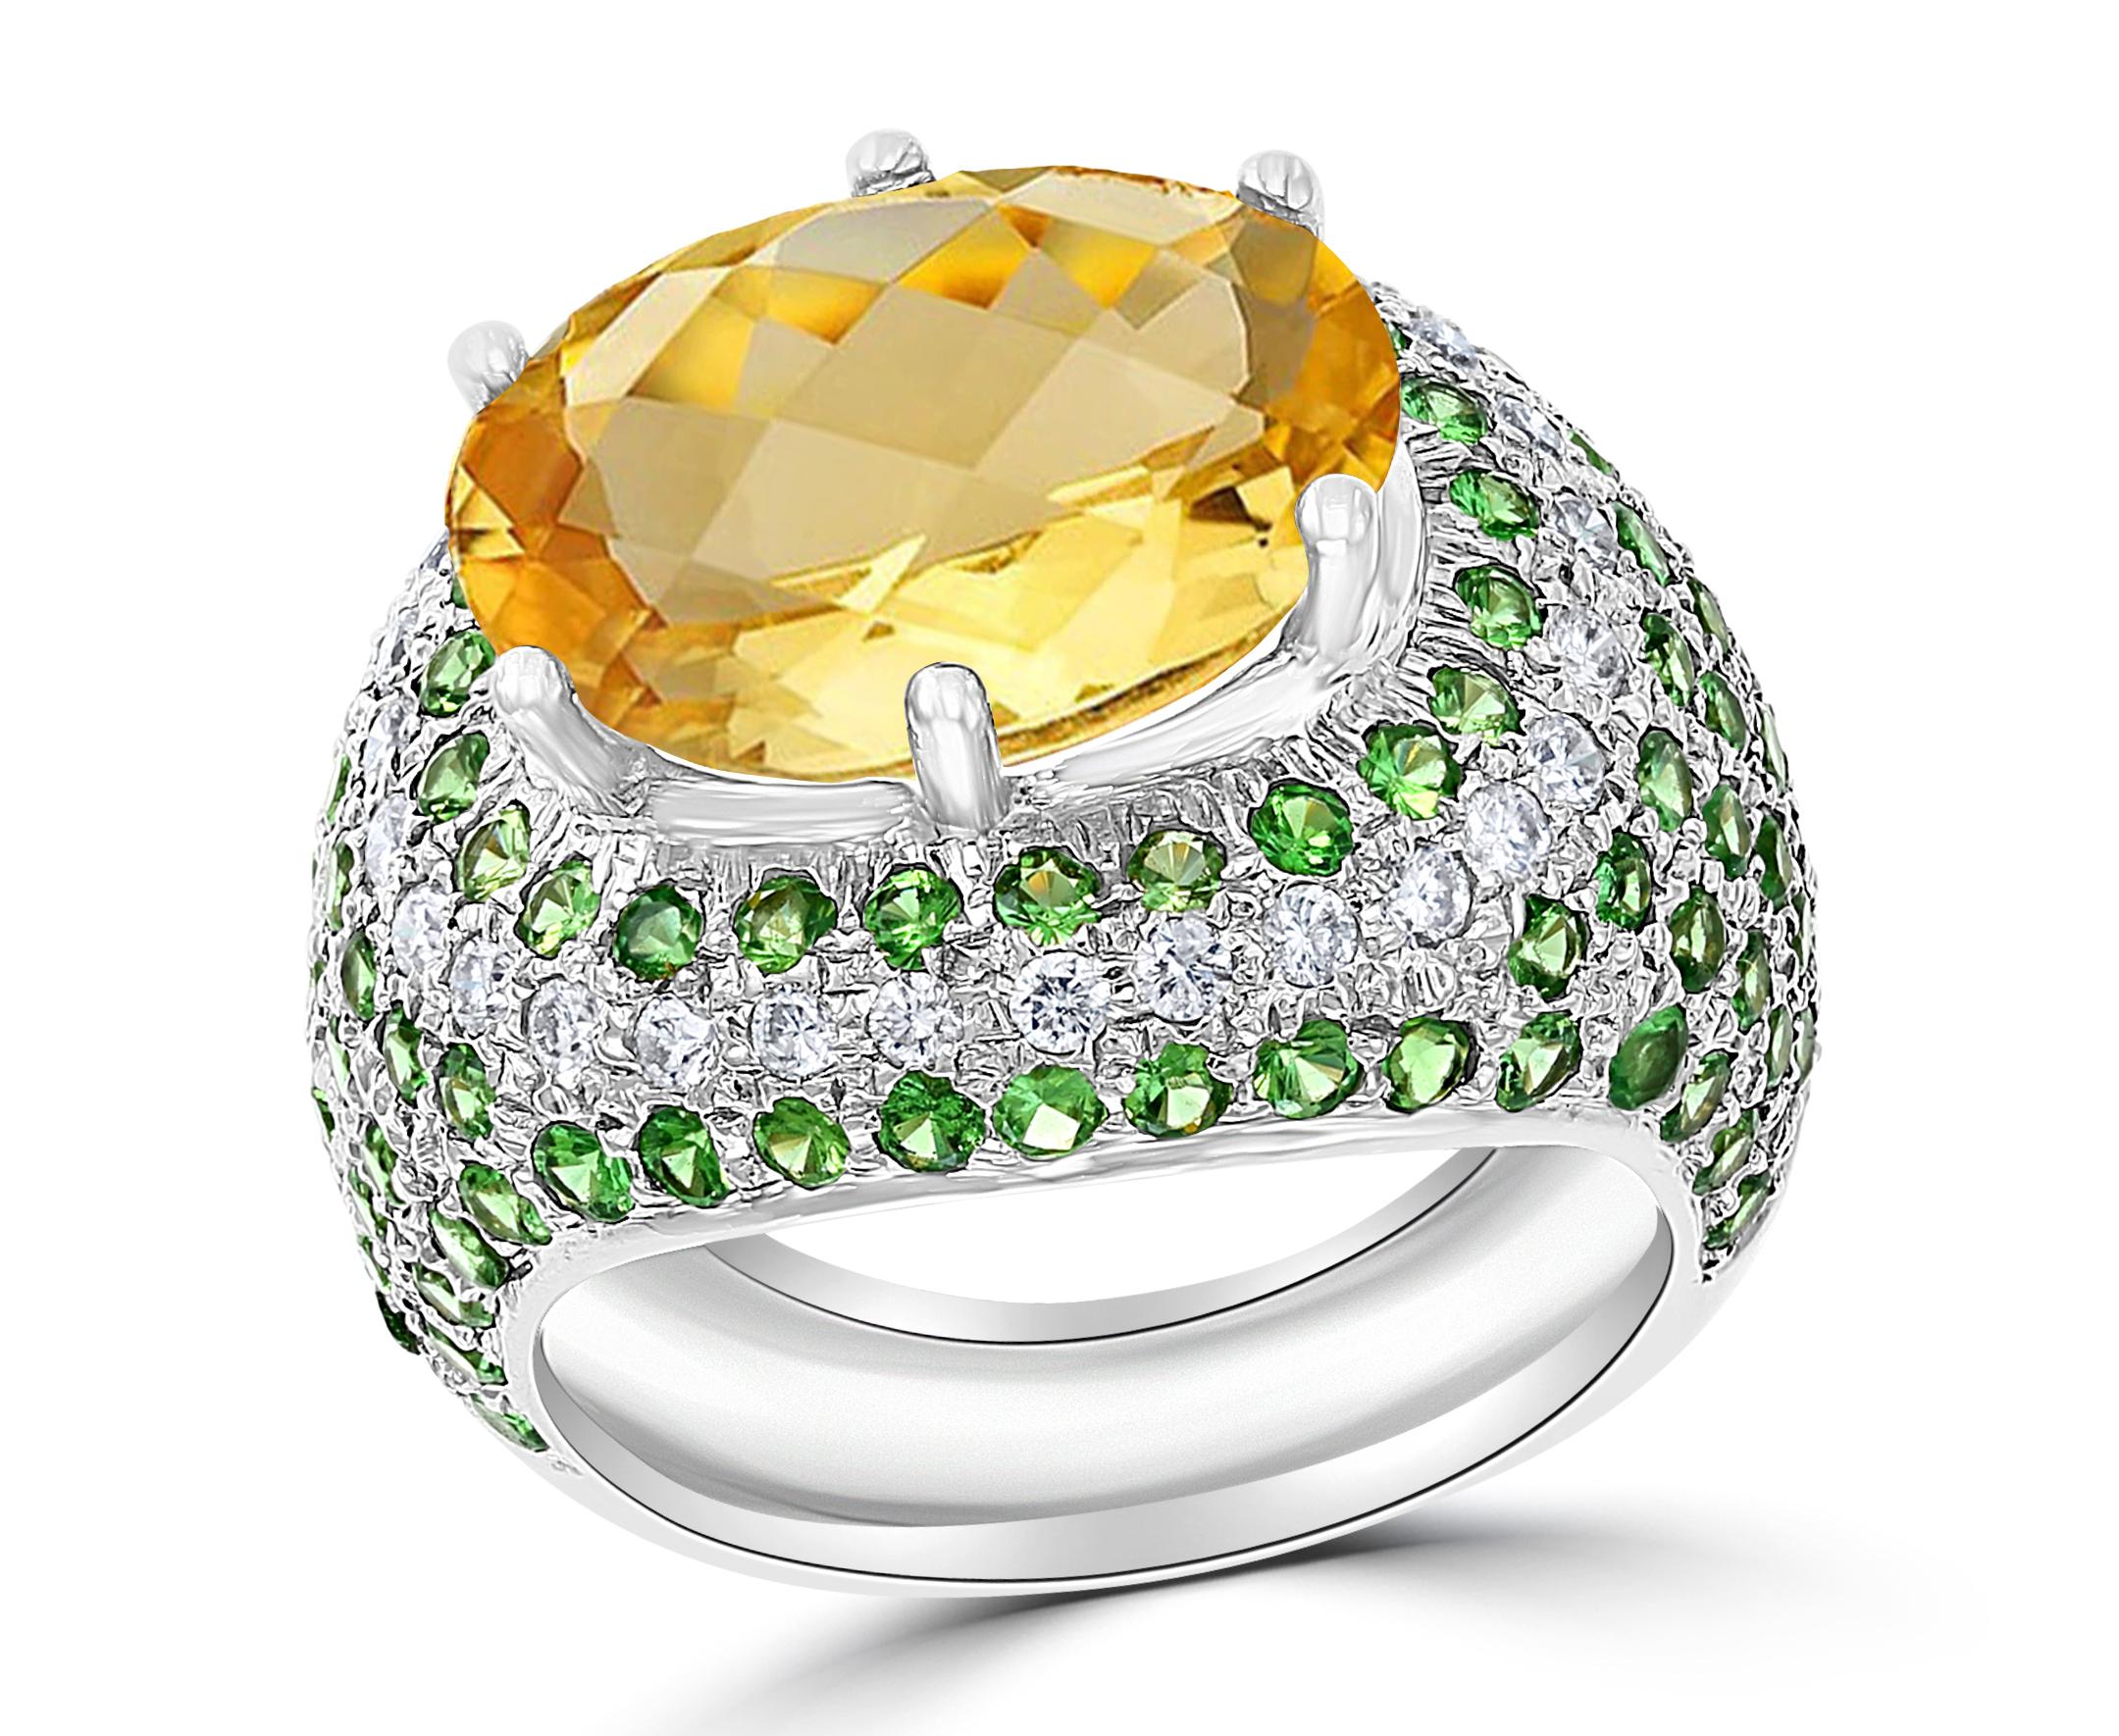 3 4 carat diamond ring